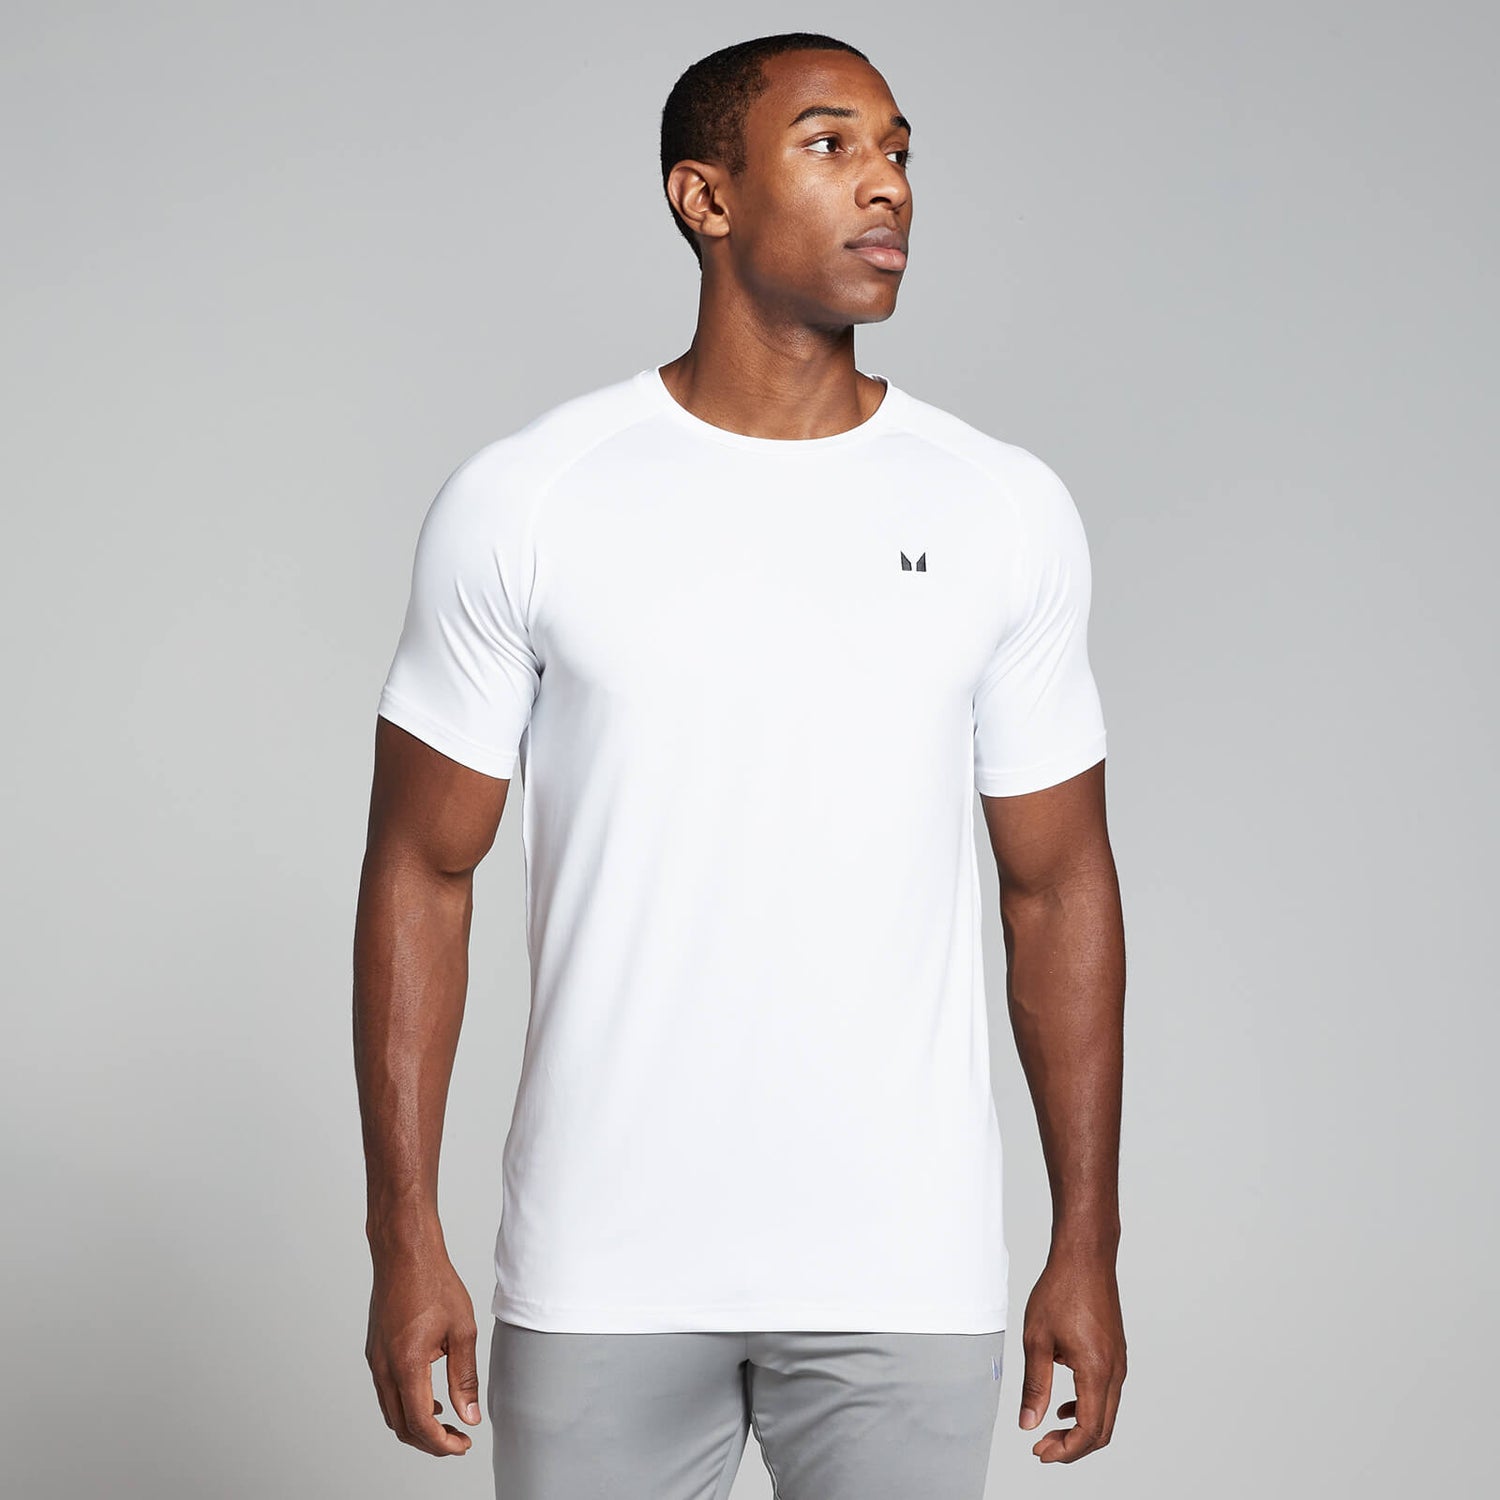 Мужская футболка MP Training с короткими рукавами — белый цвет - XS